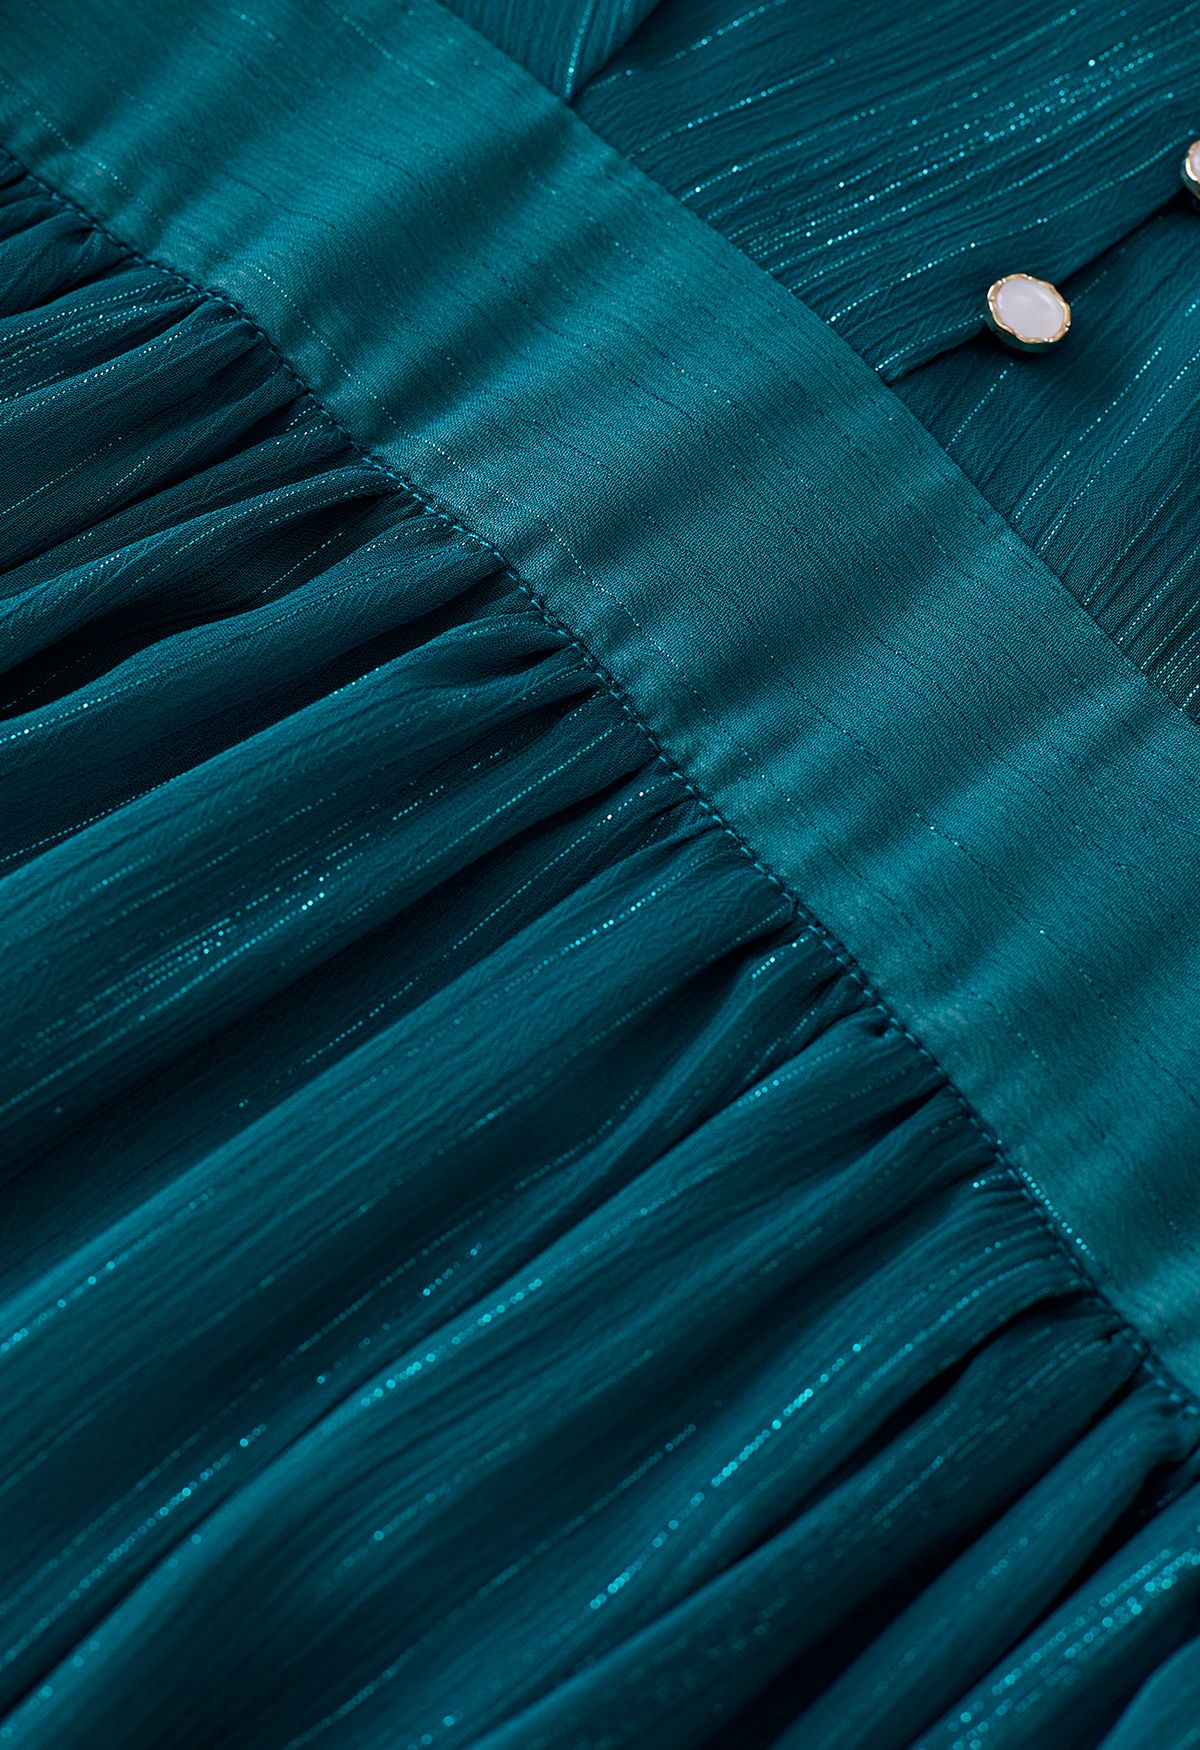 Metallic Shimmer Chiffon Ruffle Sleeve Maxi Dress in Emerald - Retro ...